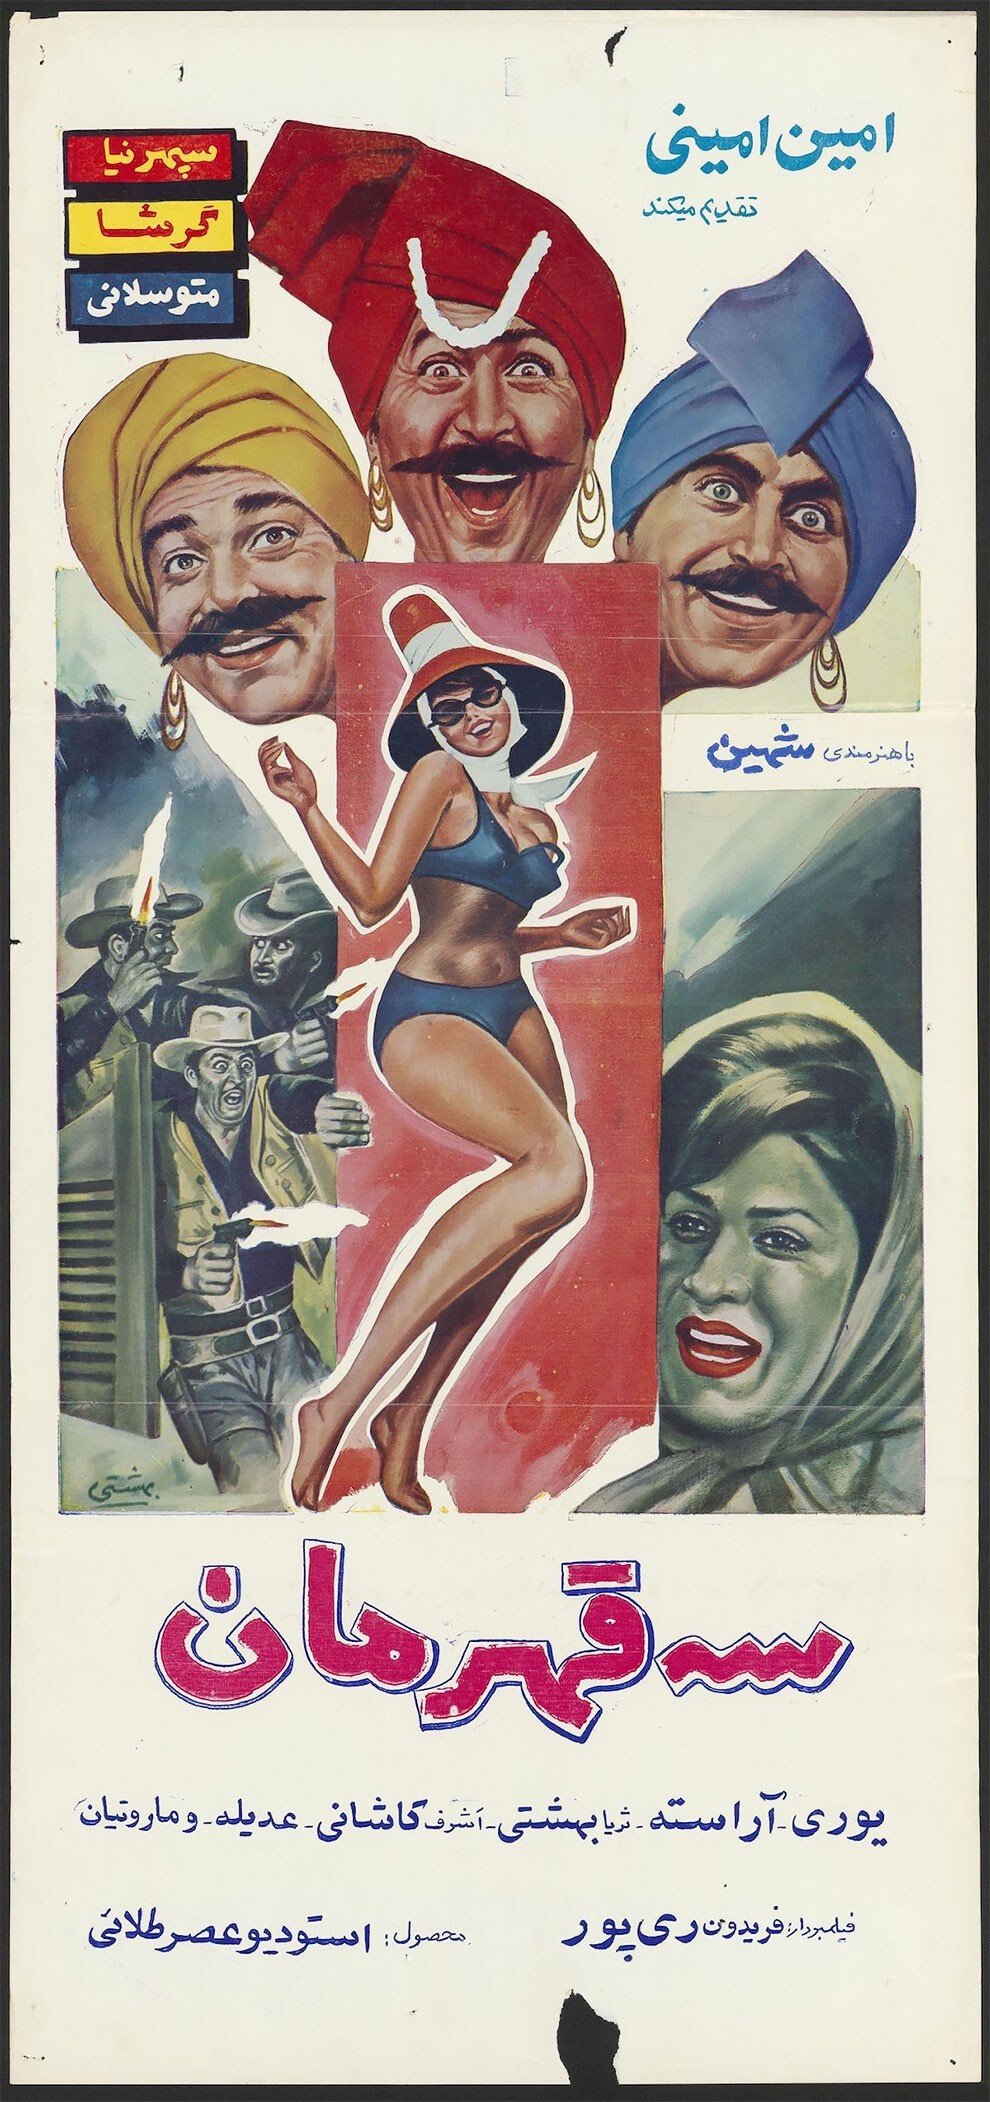 Доисламский Иран на кинопостерах 1970-х